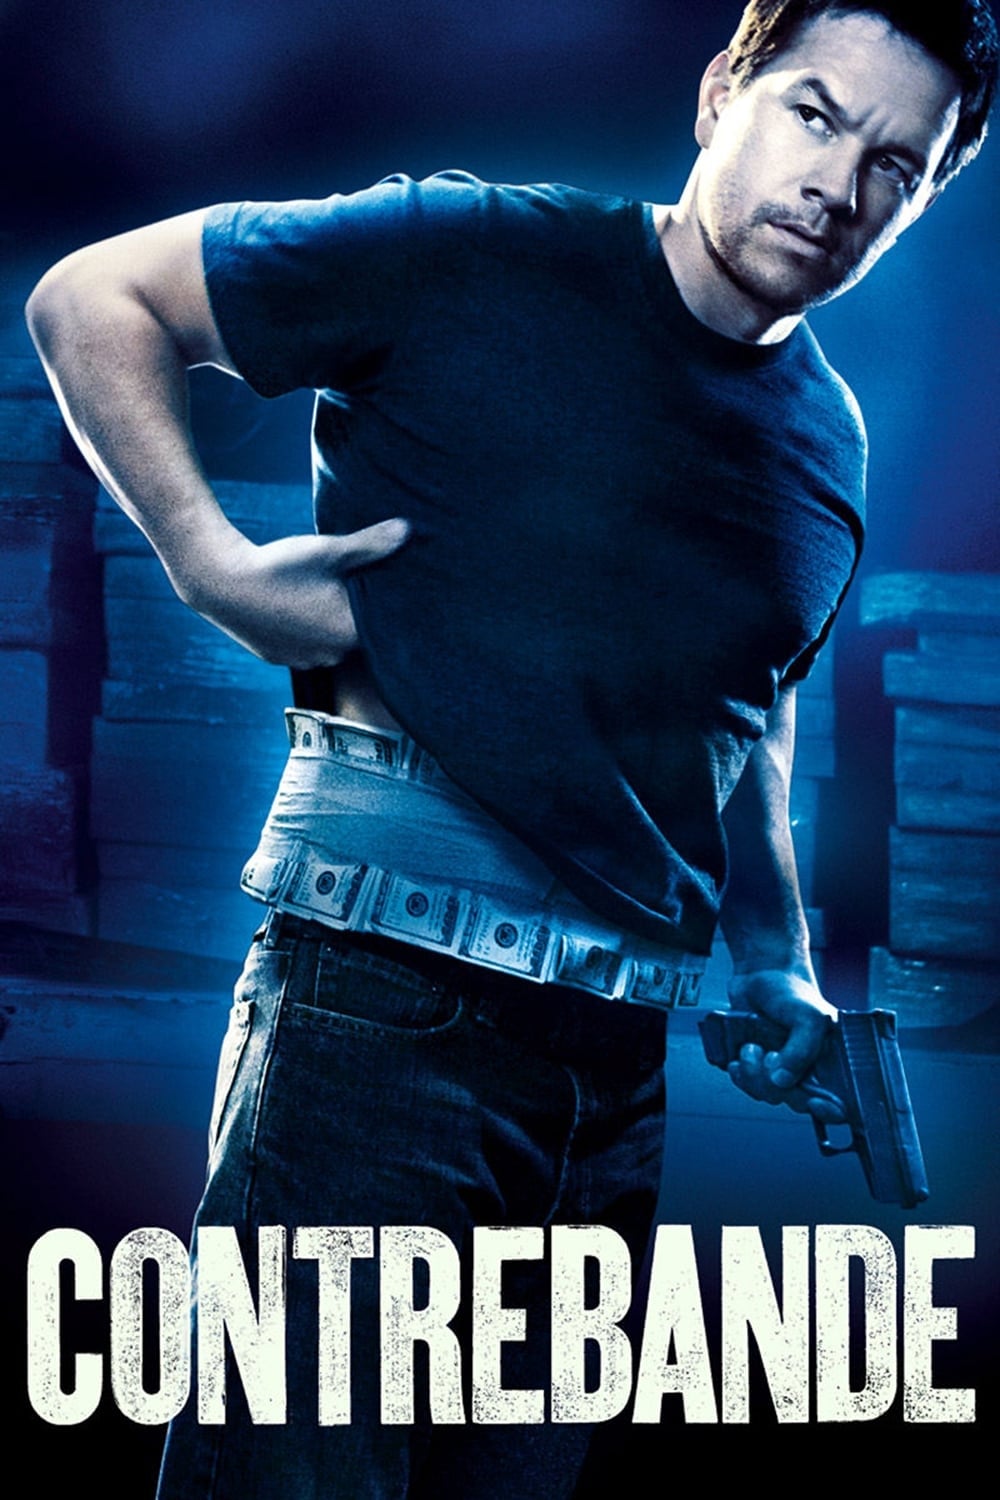 Affiche du film Contrebande poster